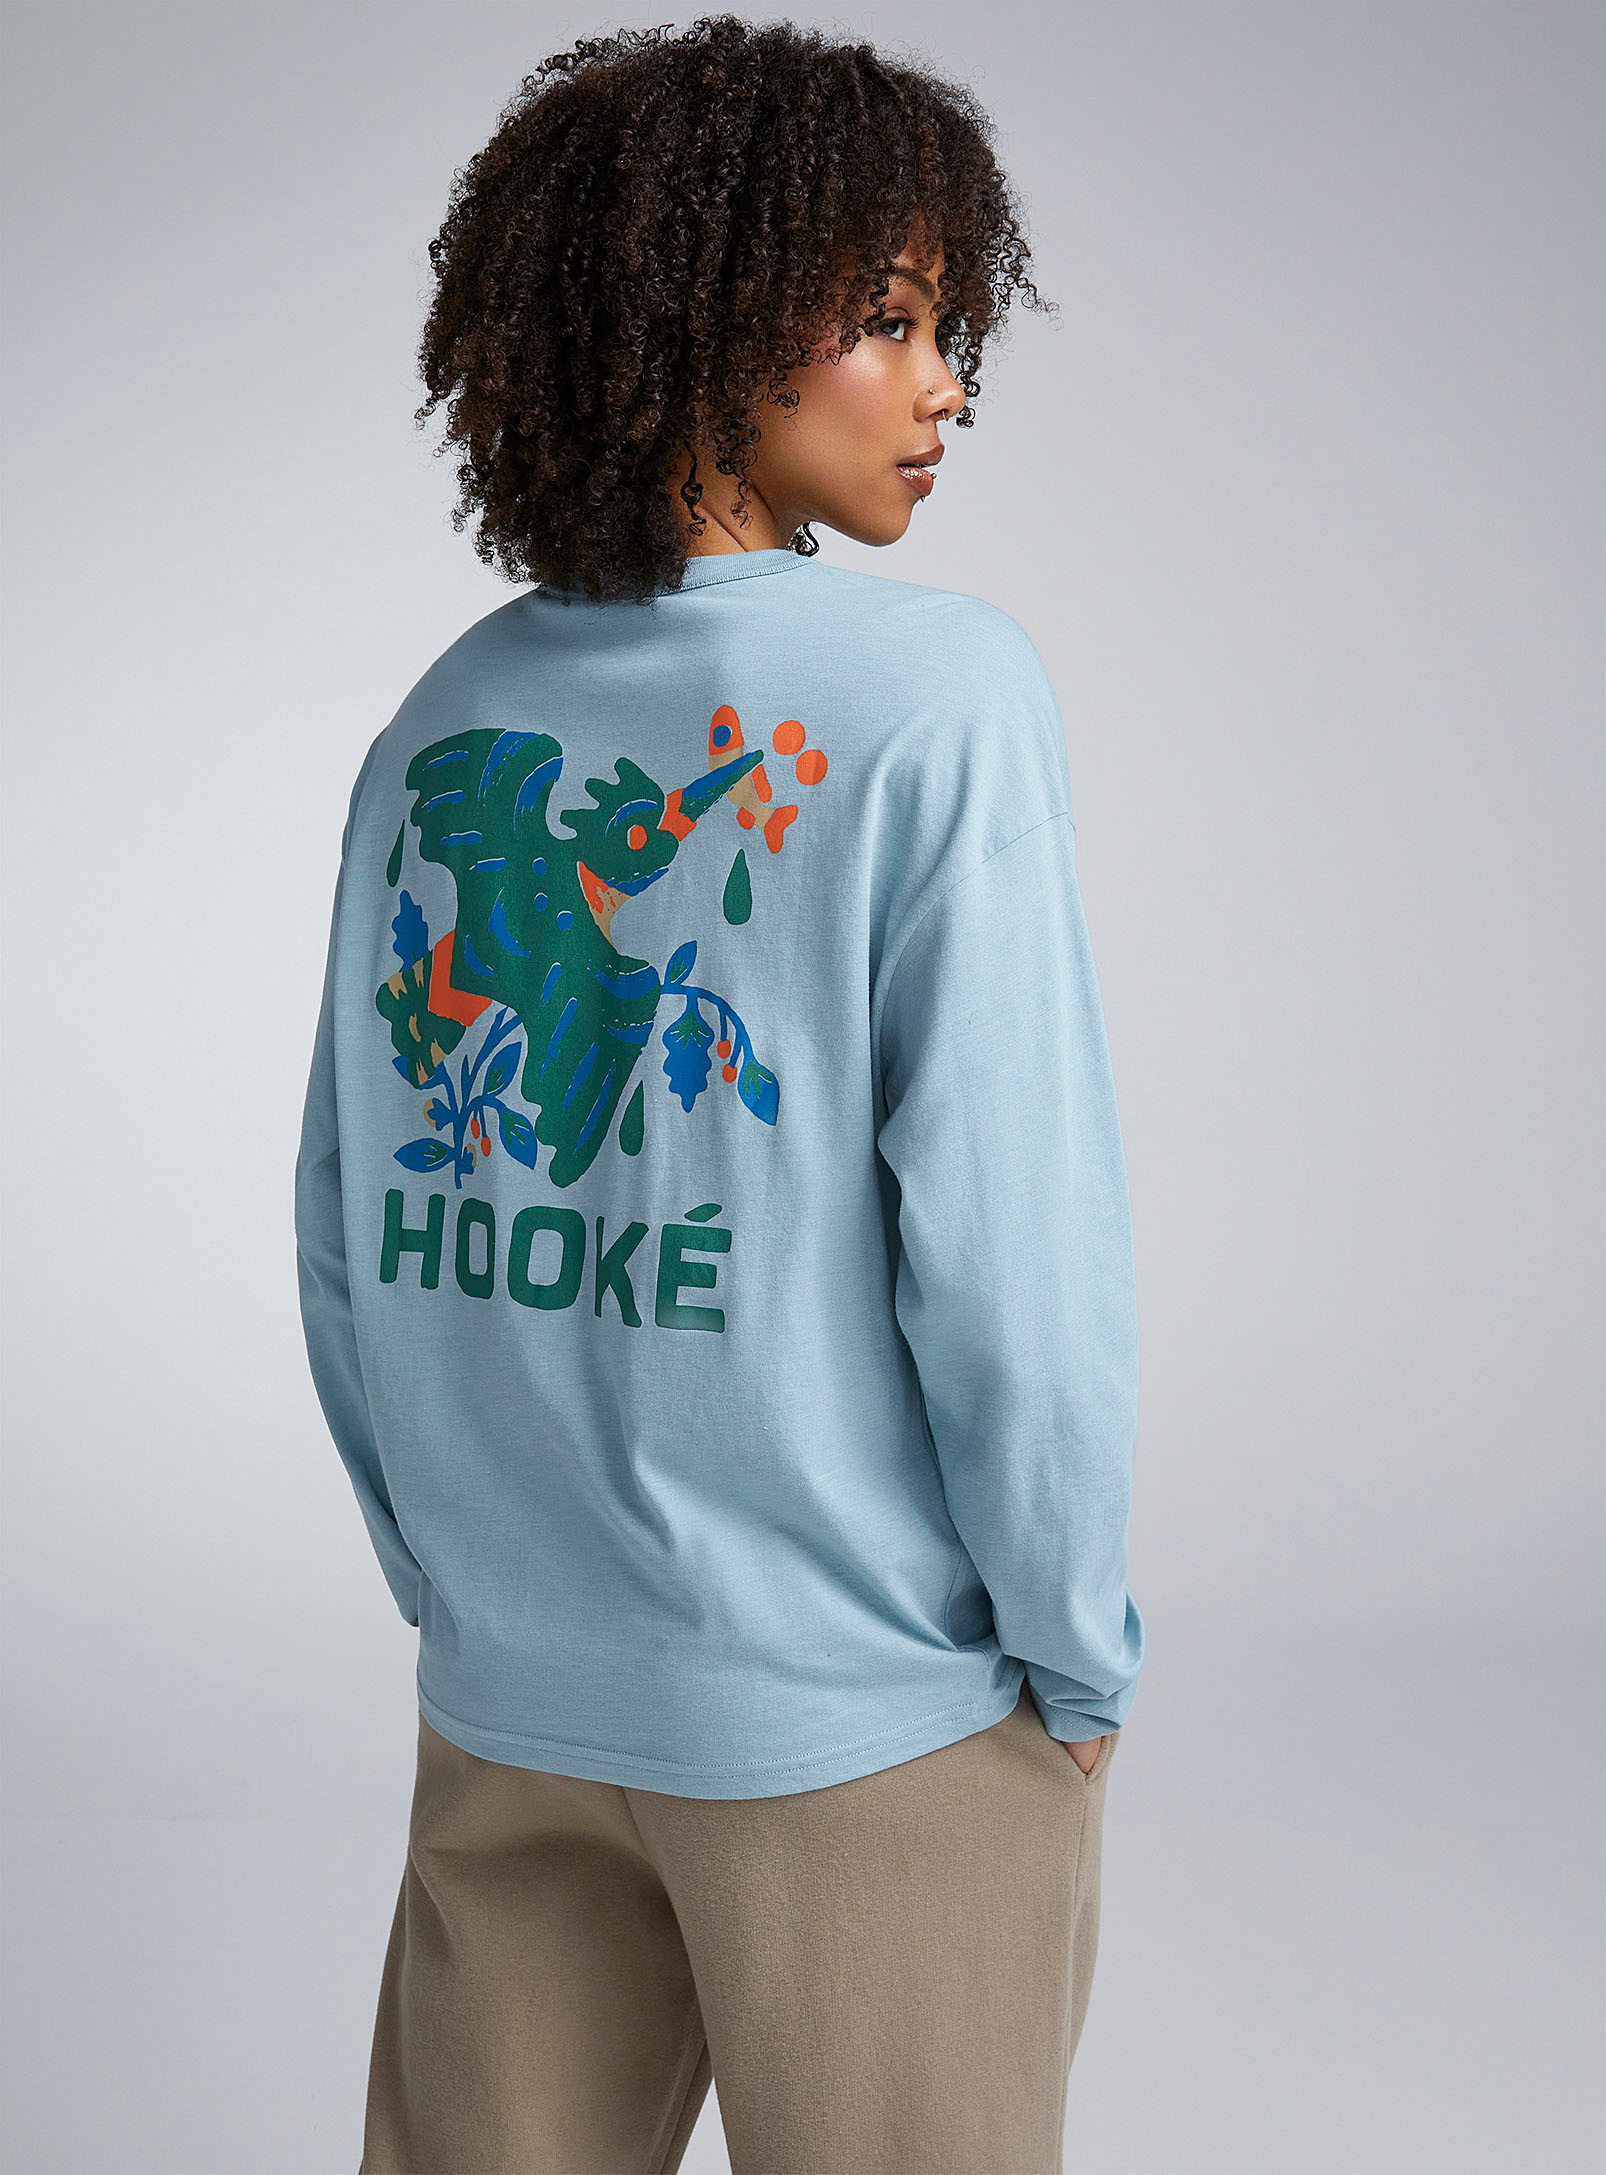 Hooké - Women's Kingfisher Tee Shirt